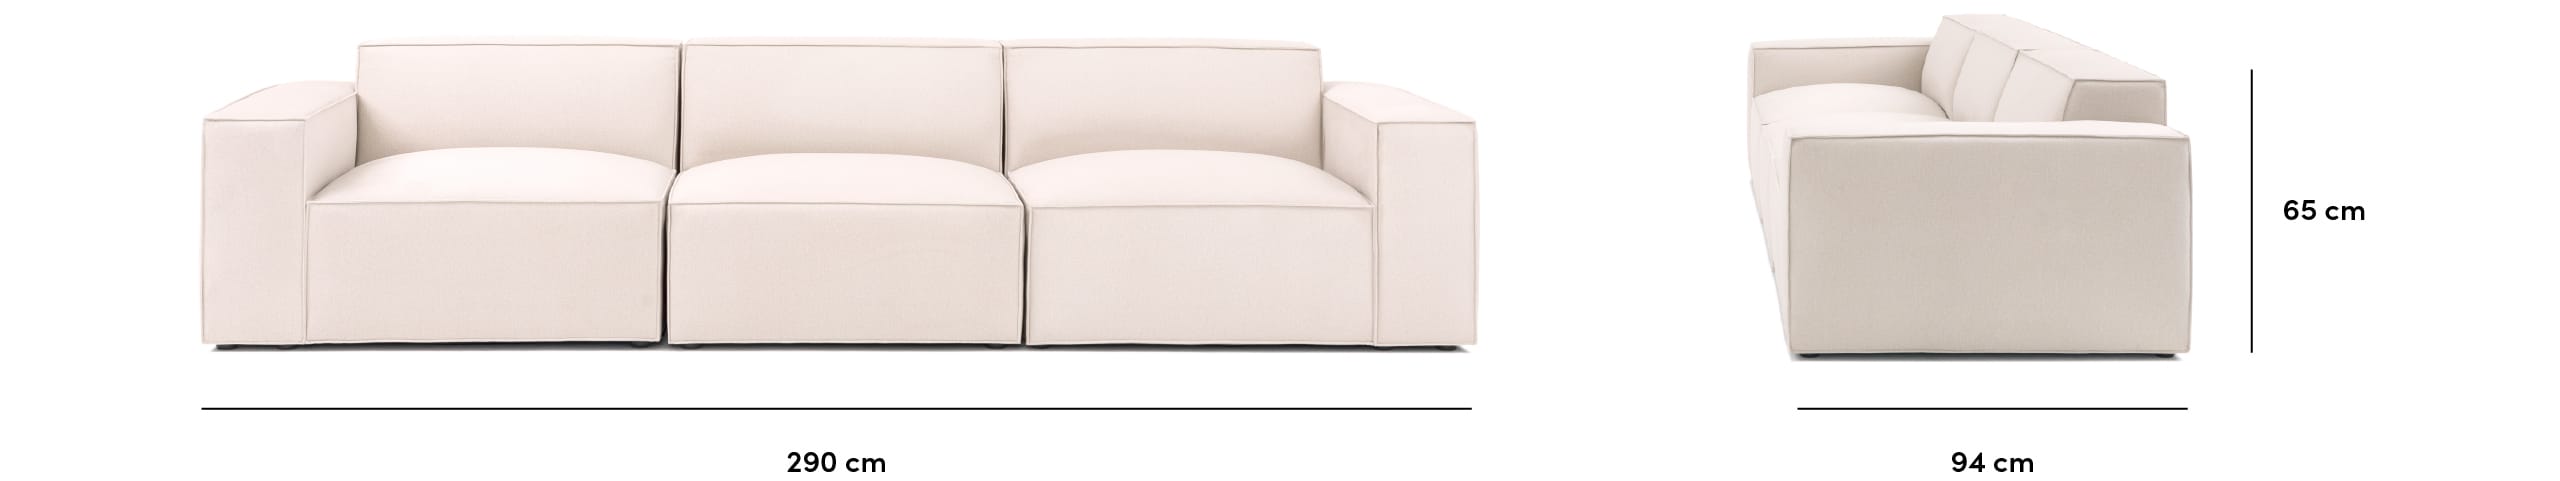 PACIFIC 3-piece modular sofa dimensions